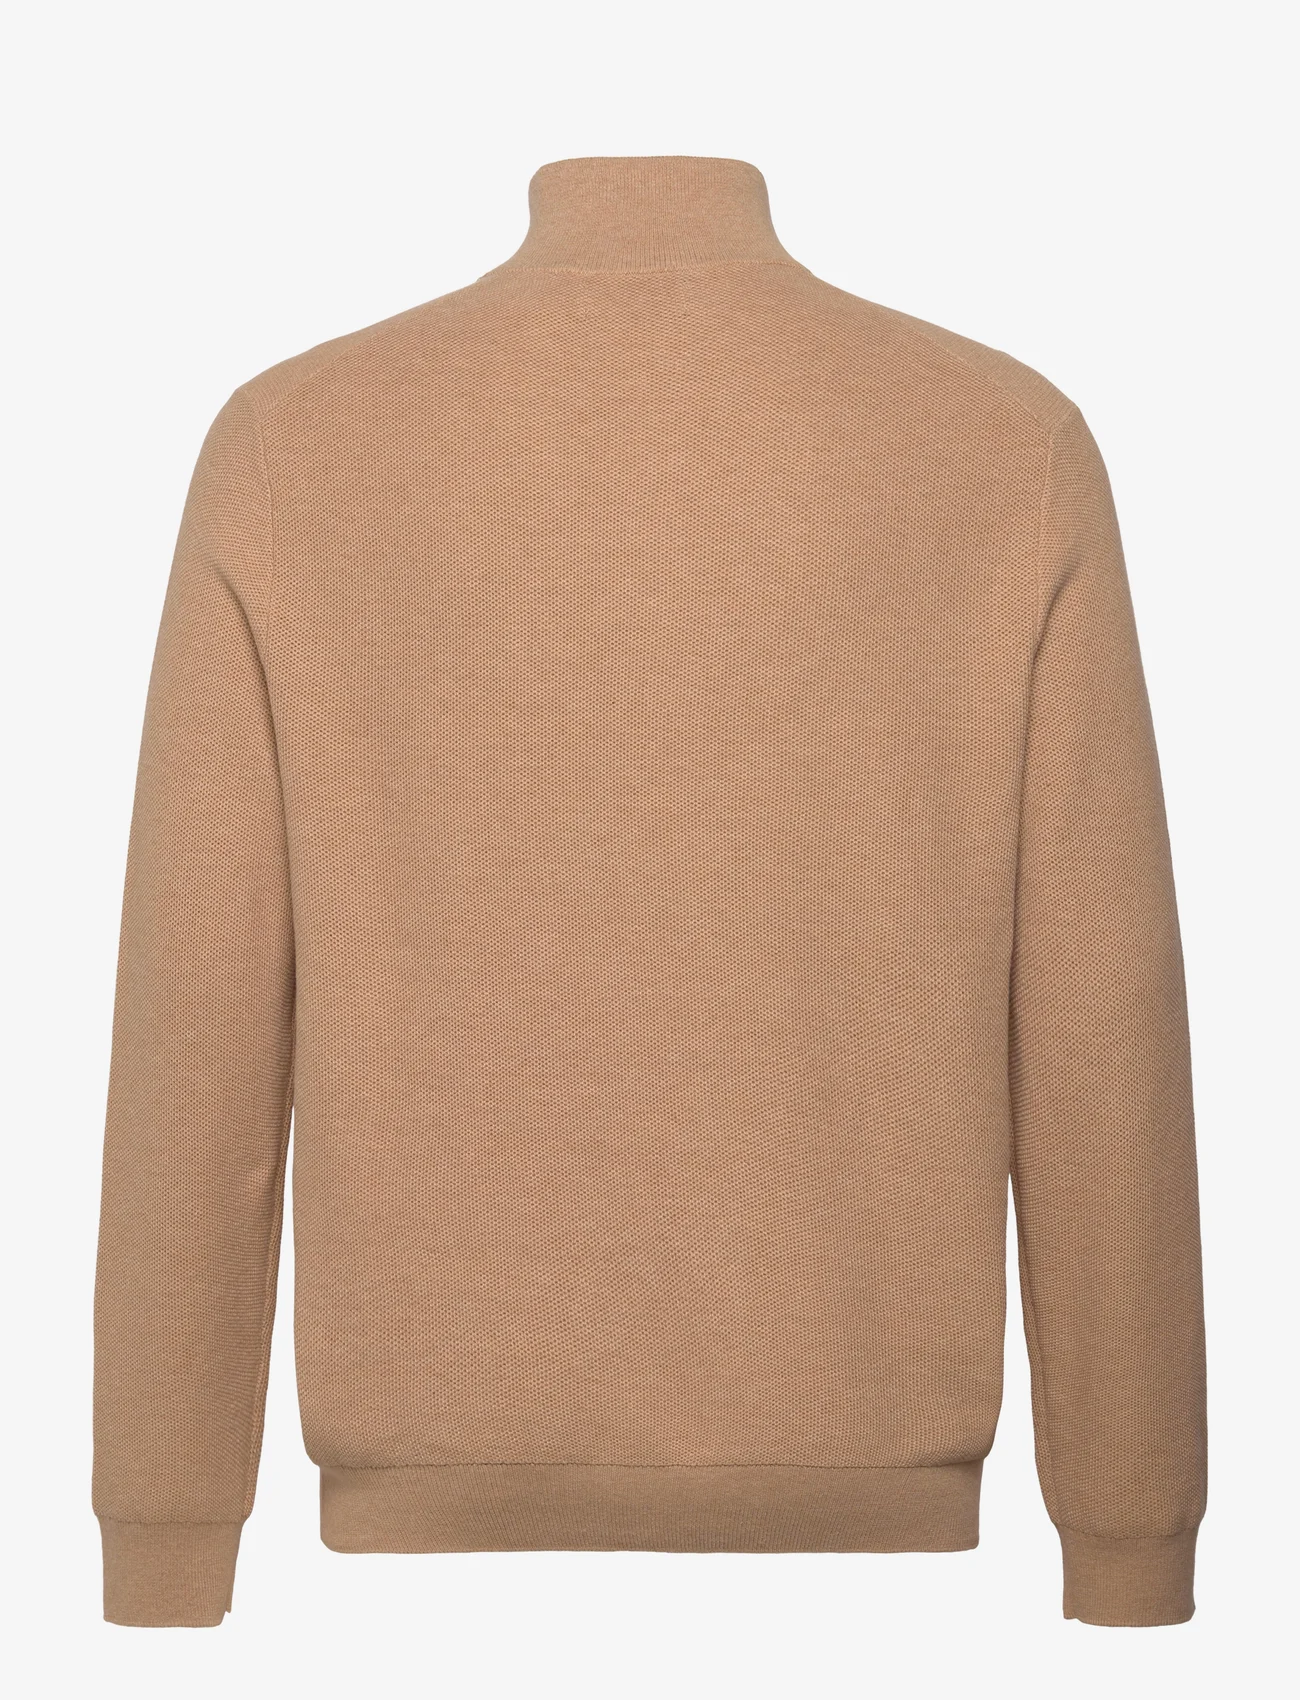 Polo Ralph Lauren - Mesh-Knit Cotton Quarter-Zip Sweater - vīriešiem - camel melange - 1